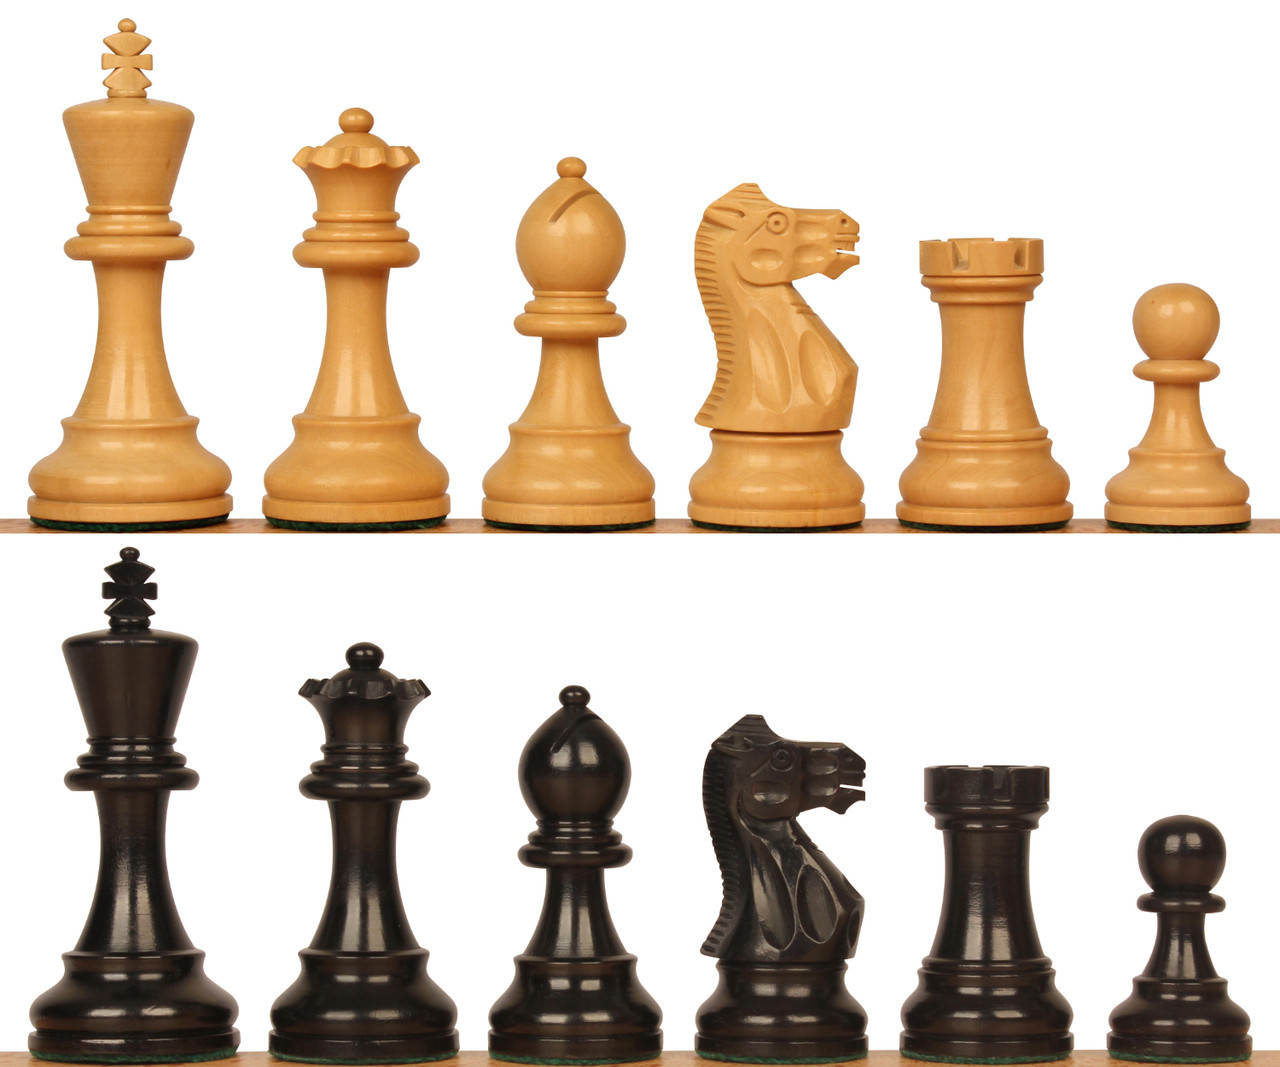 https://cdn11.bigcommerce.com/s-5p6k1/images/stencil/1280x1280/products/2244/65138/chess-set-parker-ebonized-boxwood-both-pieces-1280x1067__61551.1687887731.jpg?c=2